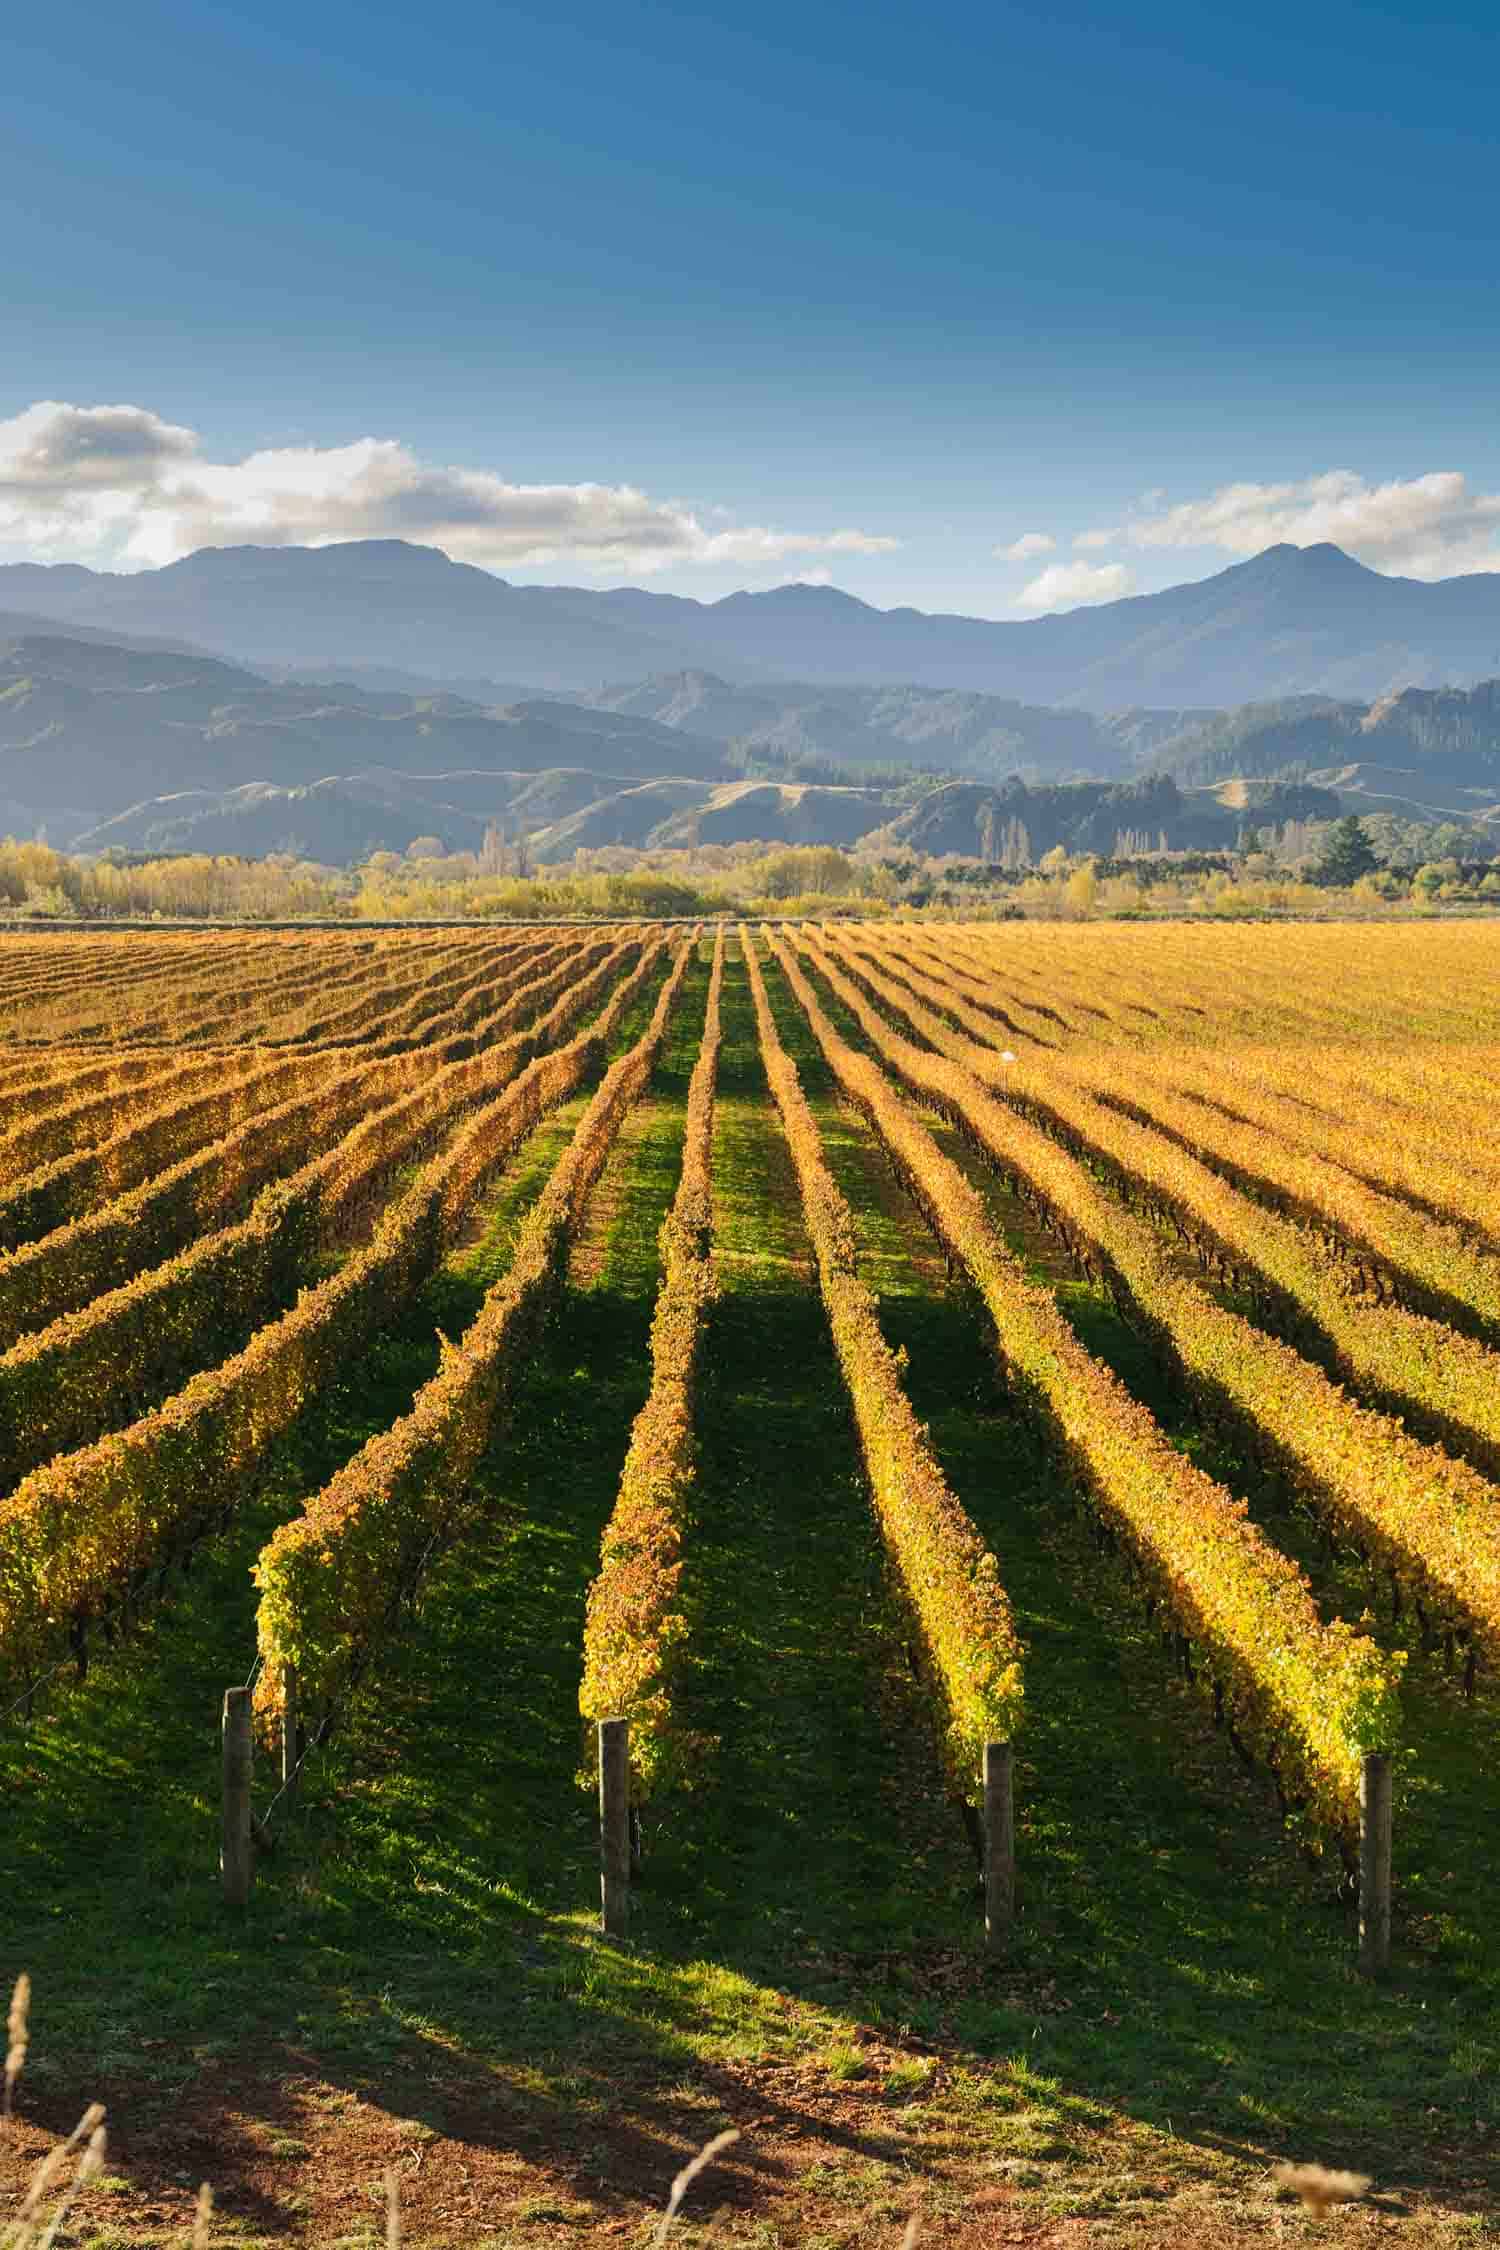 Vineyard in the Marlborough district of New Zealand vineyard at sunset